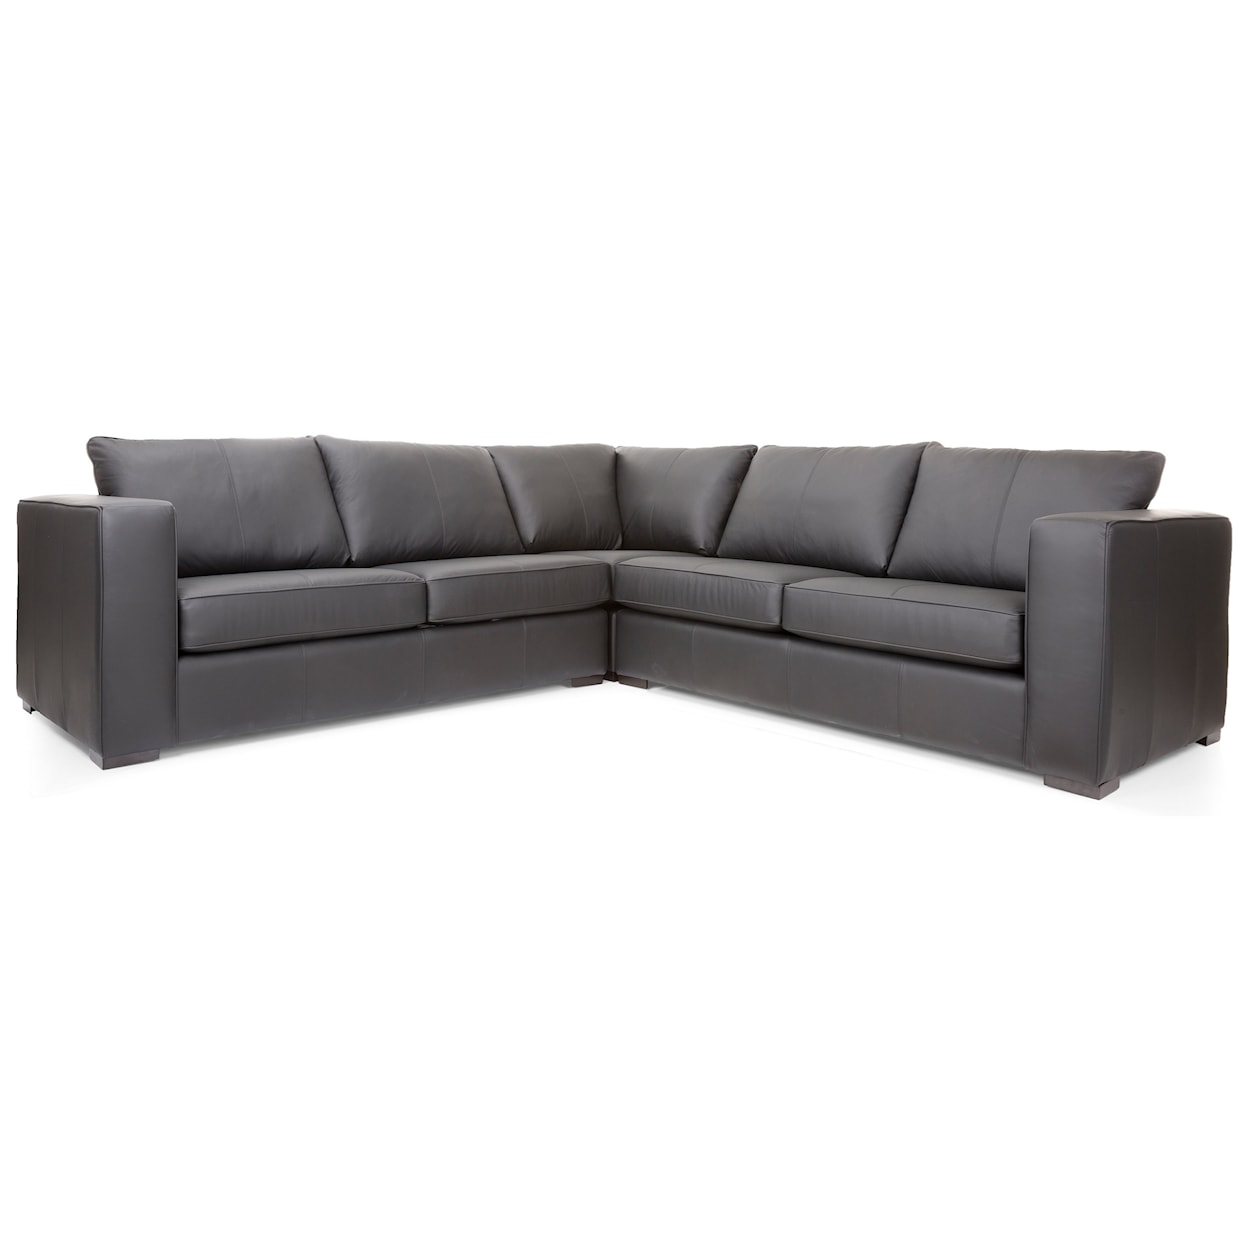 Decor-Rest 2900 Sectional Sofa